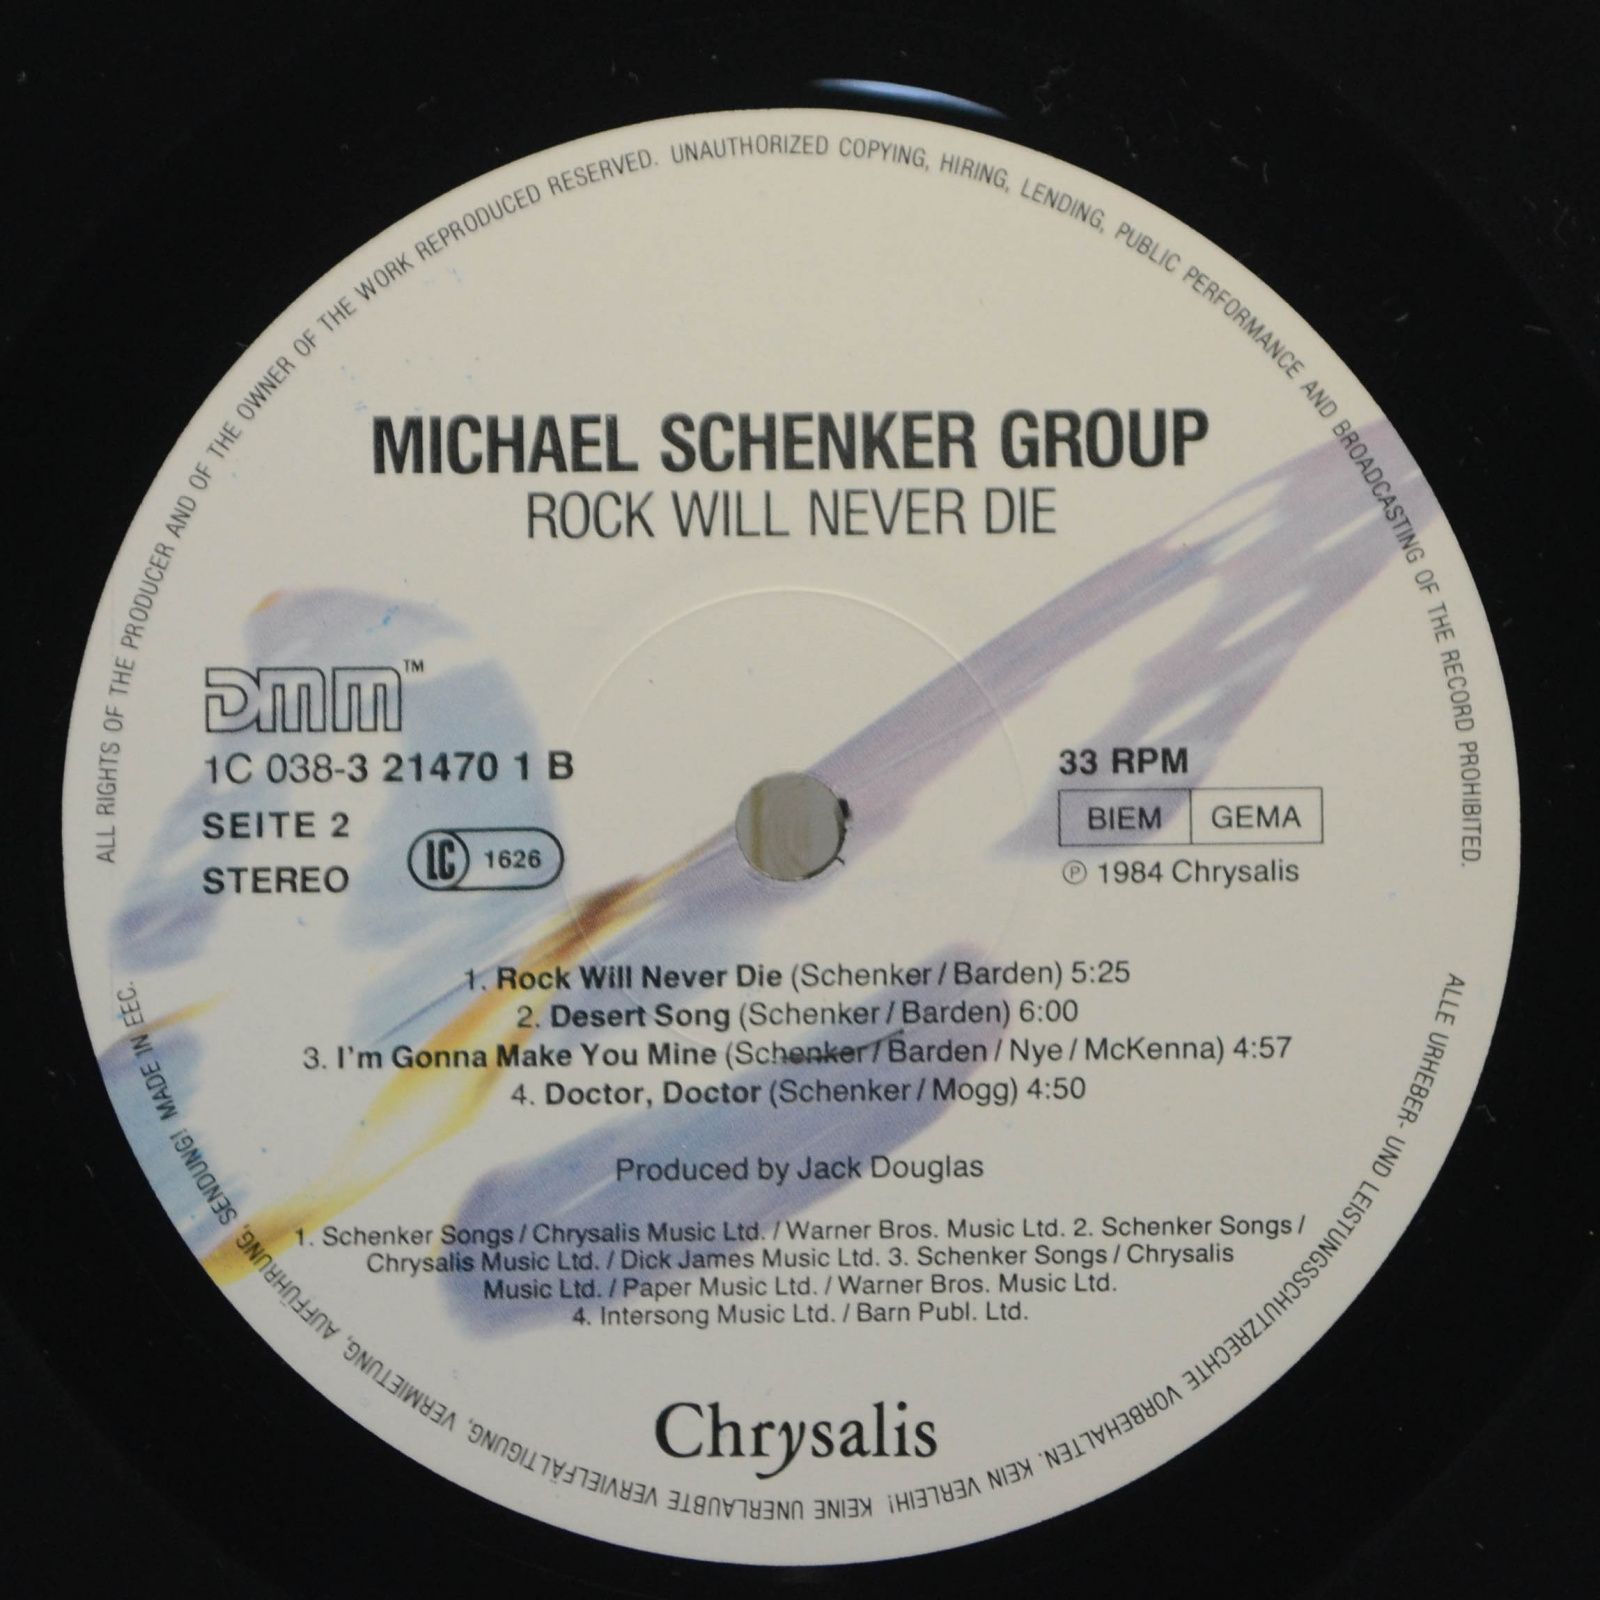 Michael Schenker Group — Rock Will Never Die, 1984